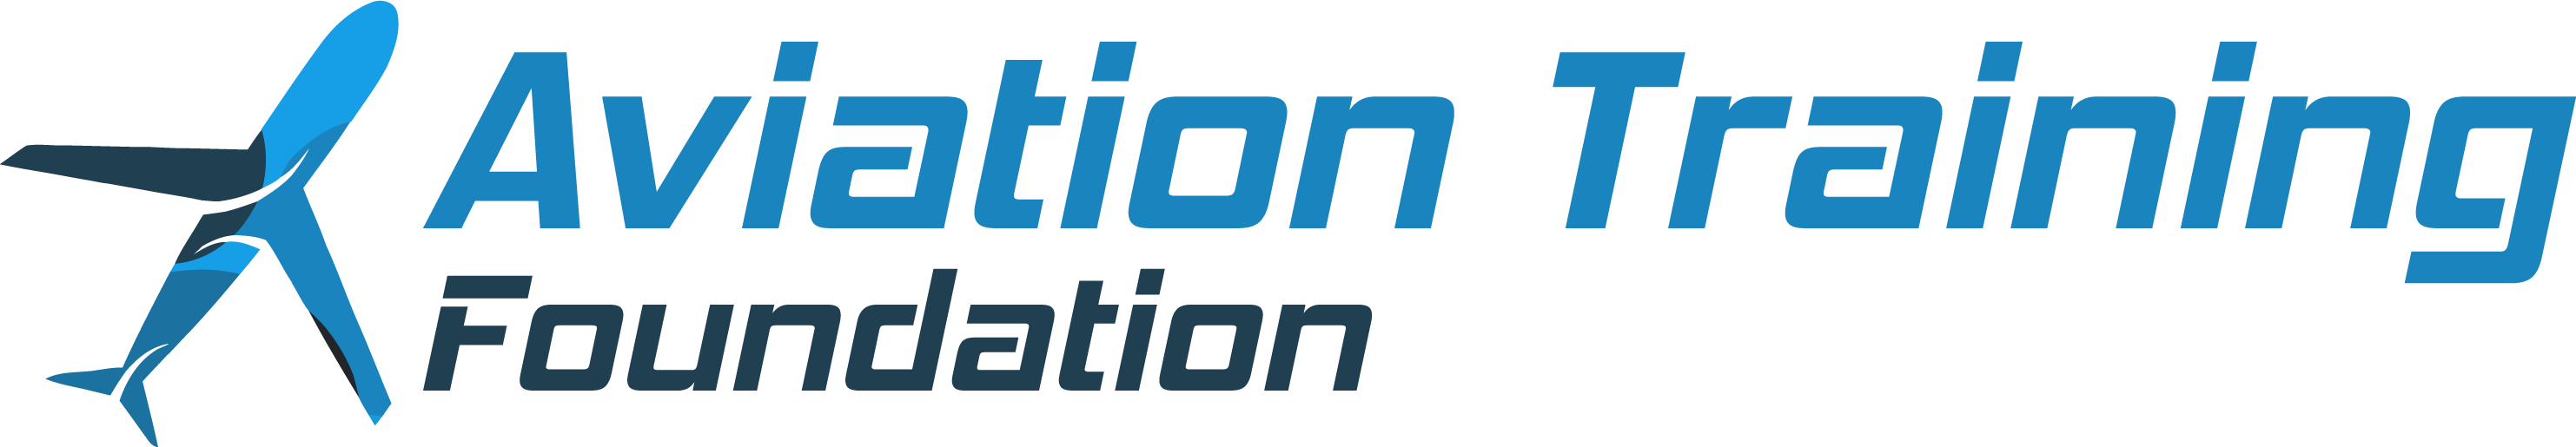 Aviation Training Foundation